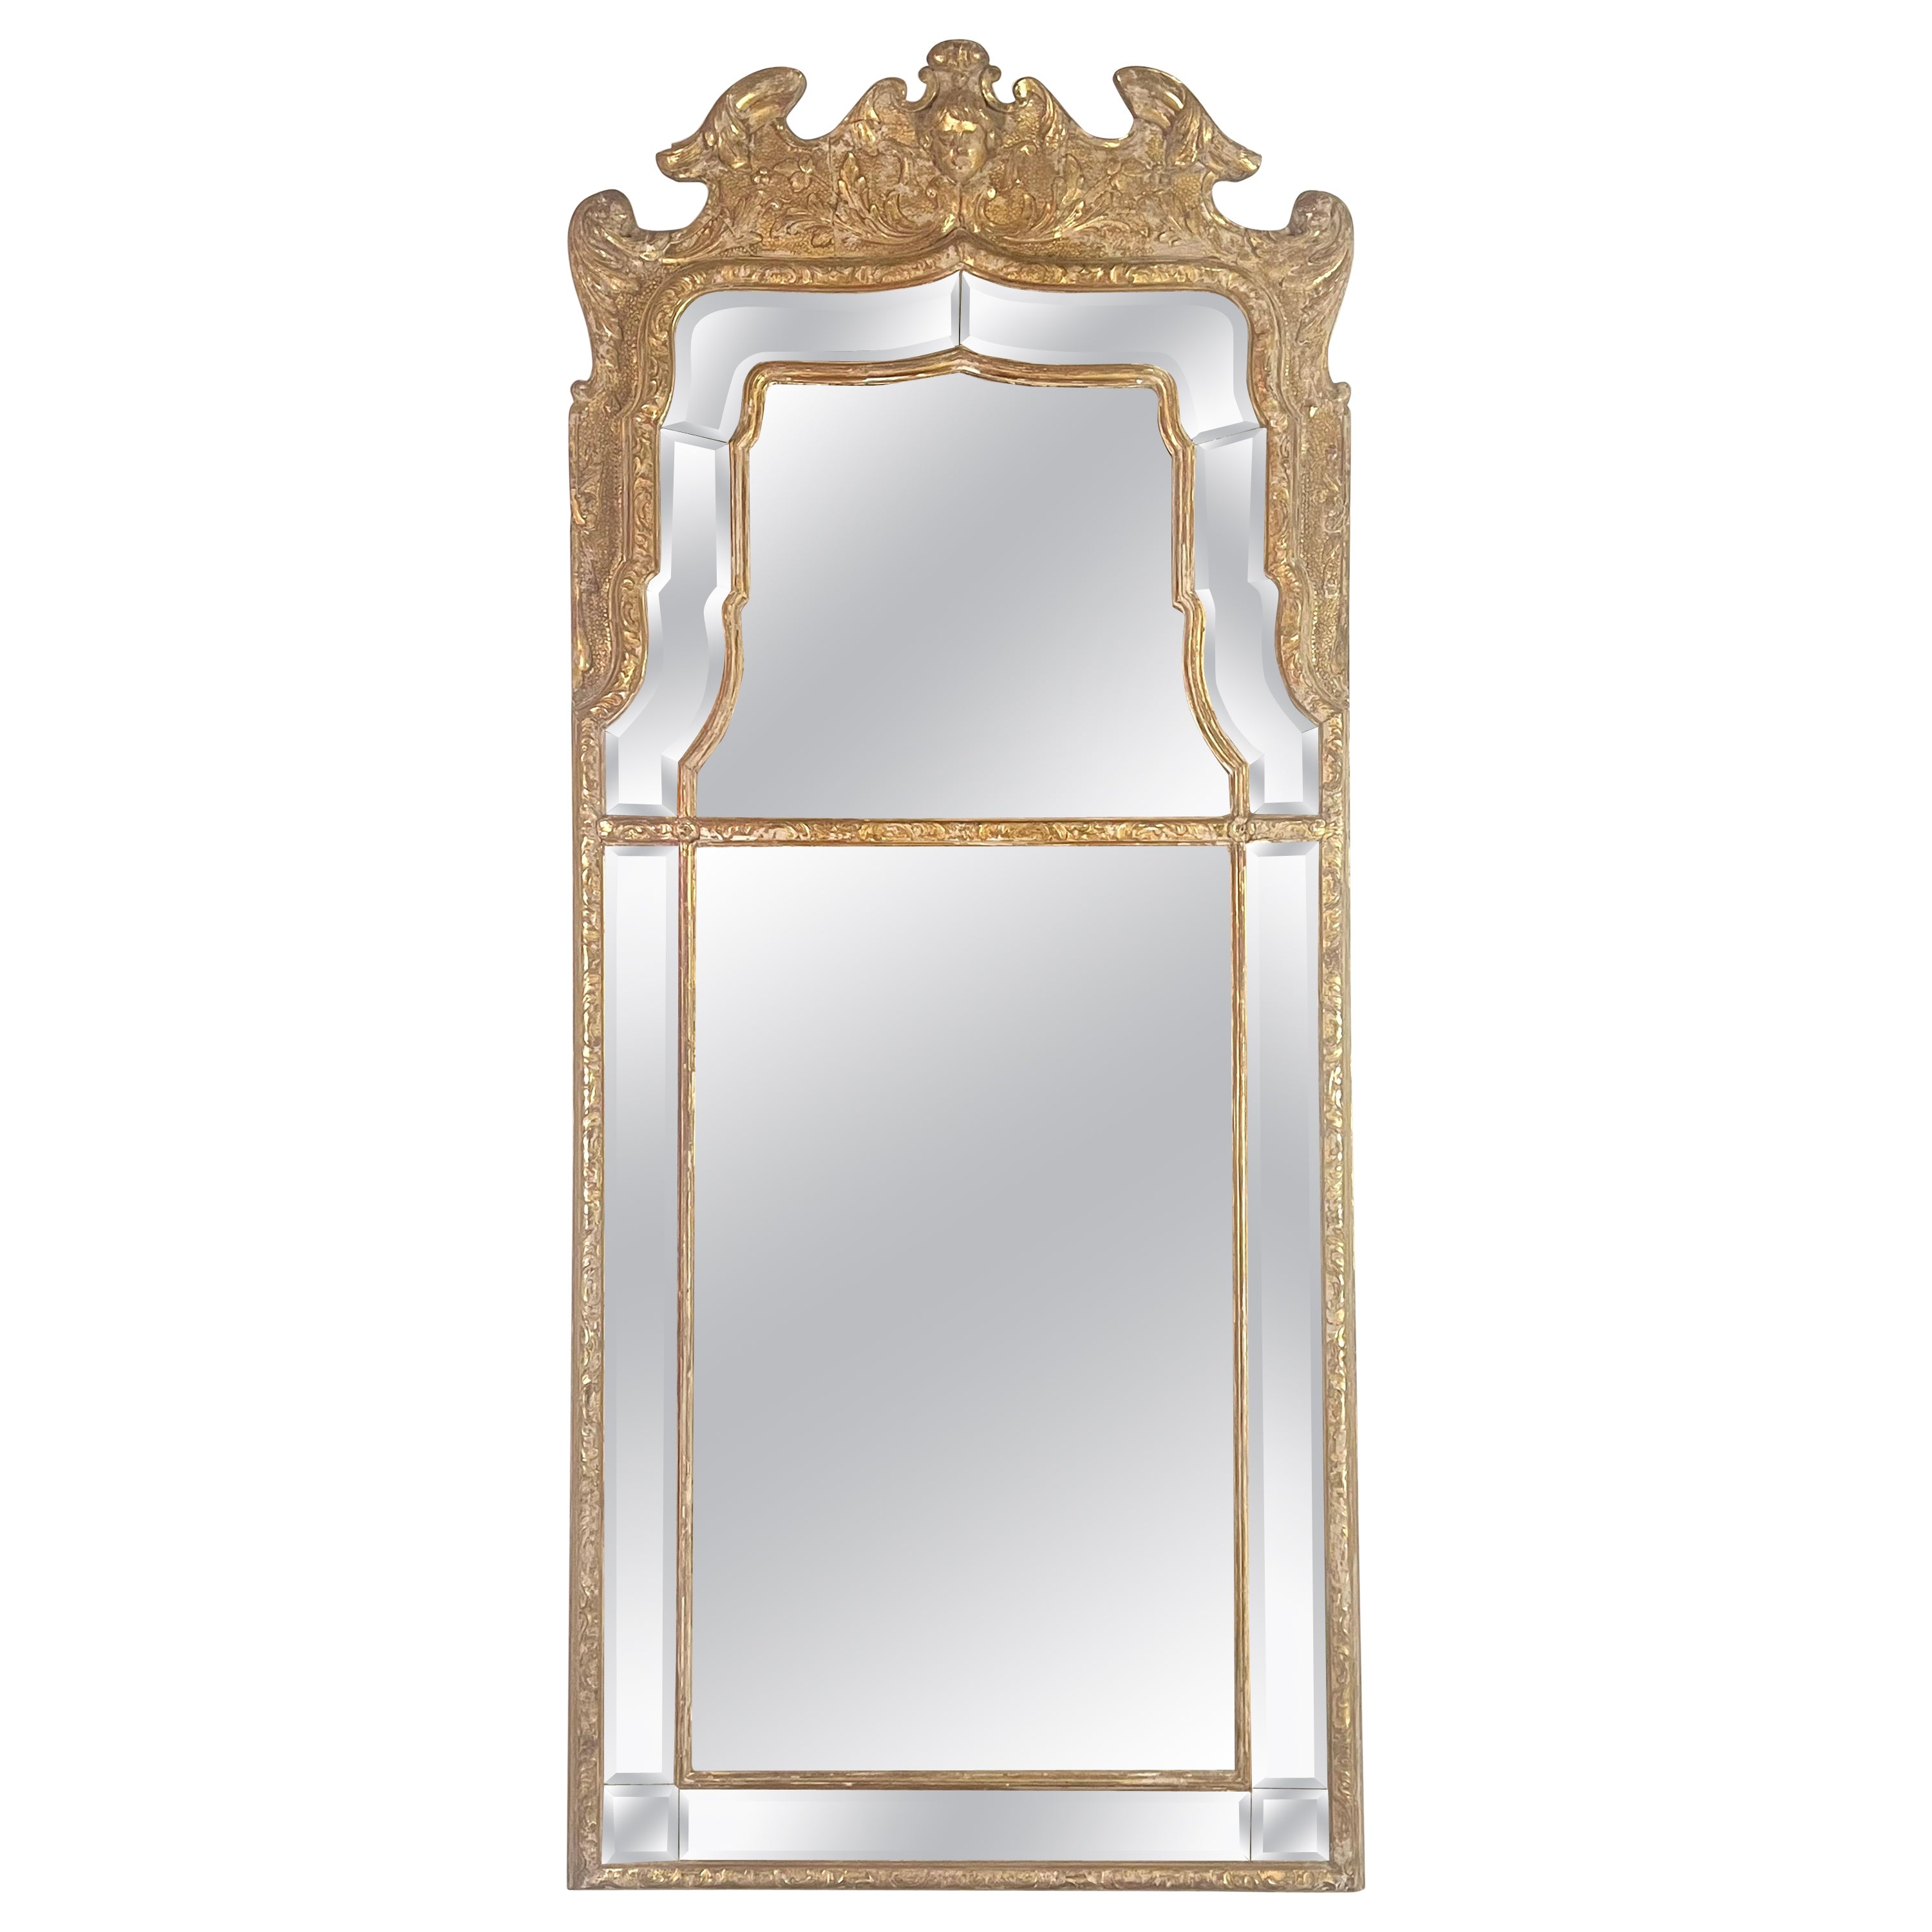 19th C. Italian Baroque Style Gilt Wood Mirror